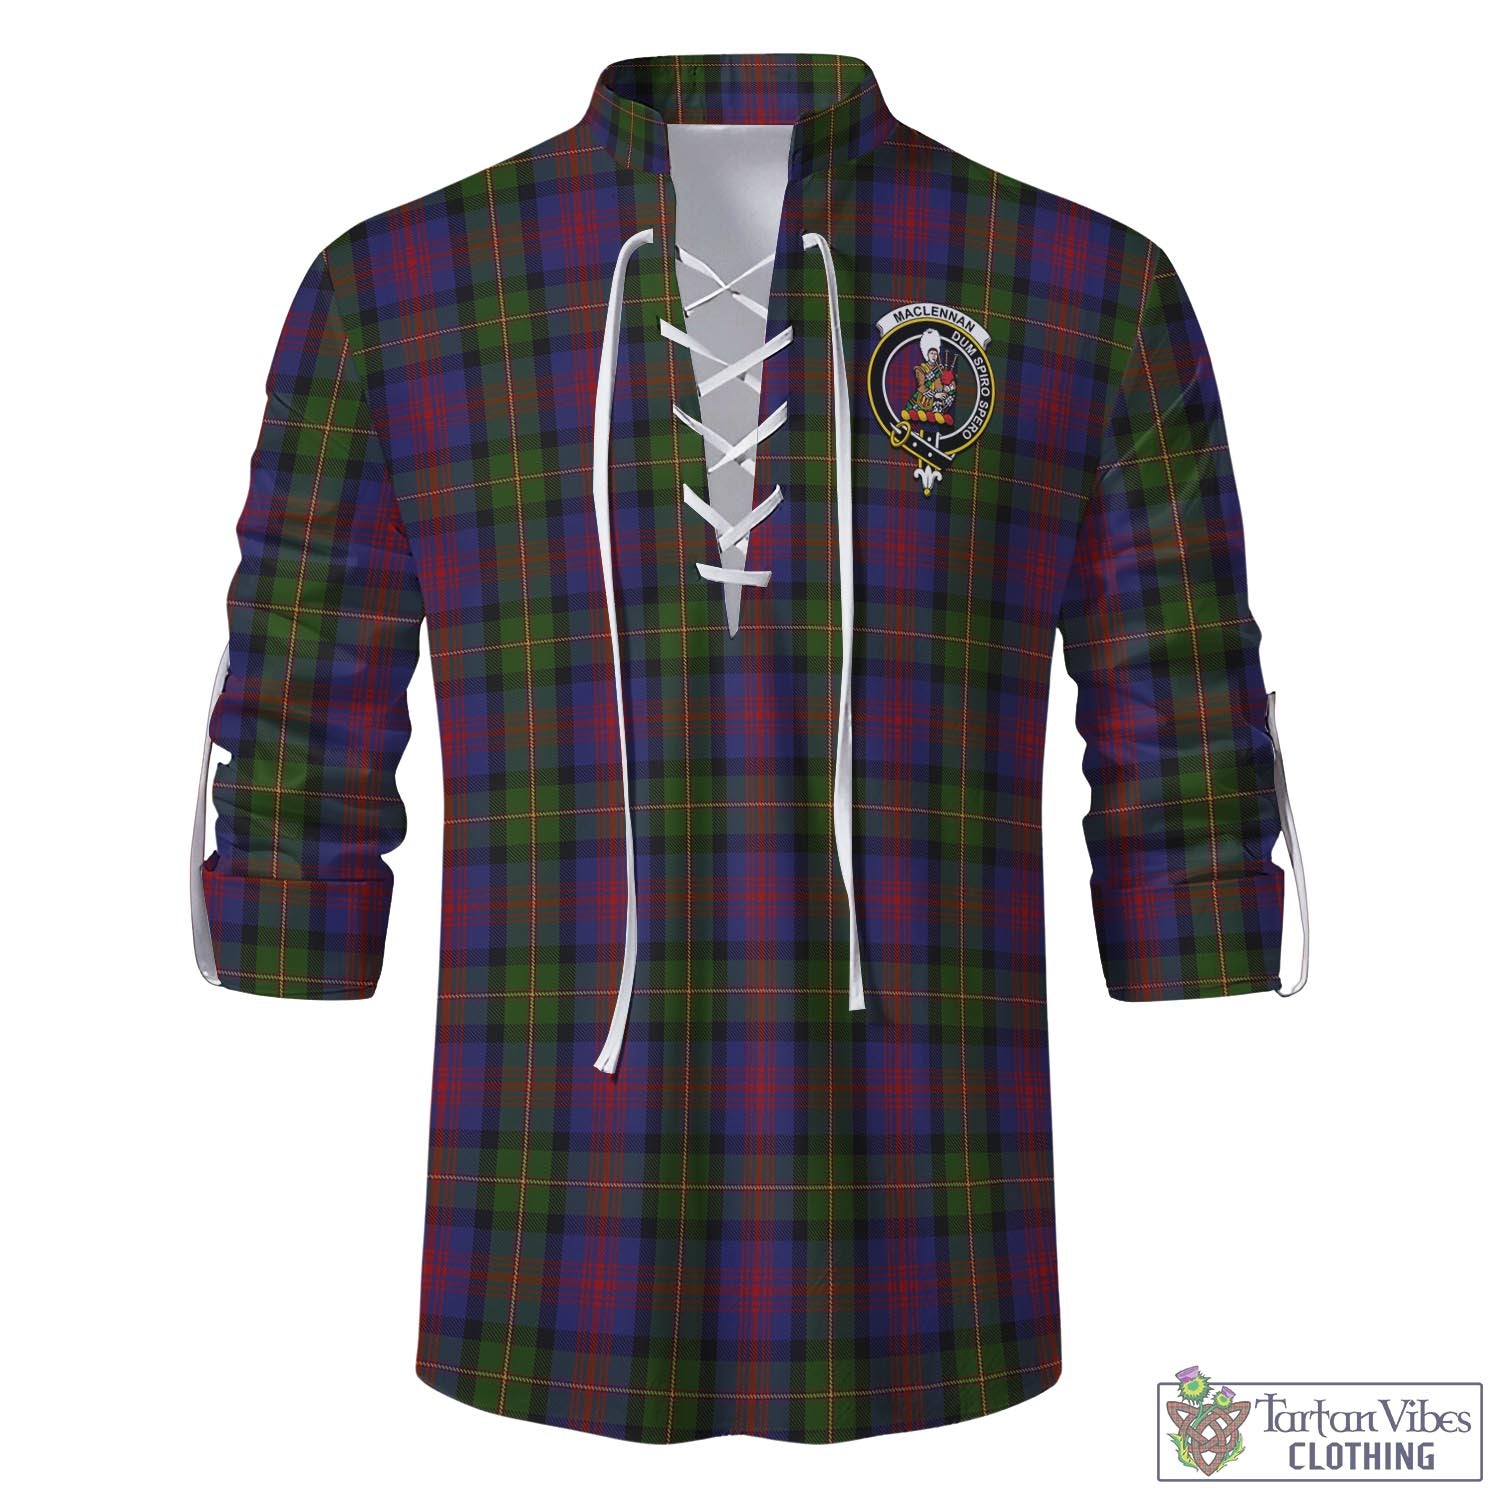 Tartan Vibes Clothing MacLennan Tartan Men's Scottish Traditional Jacobite Ghillie Kilt Shirt with Family Crest